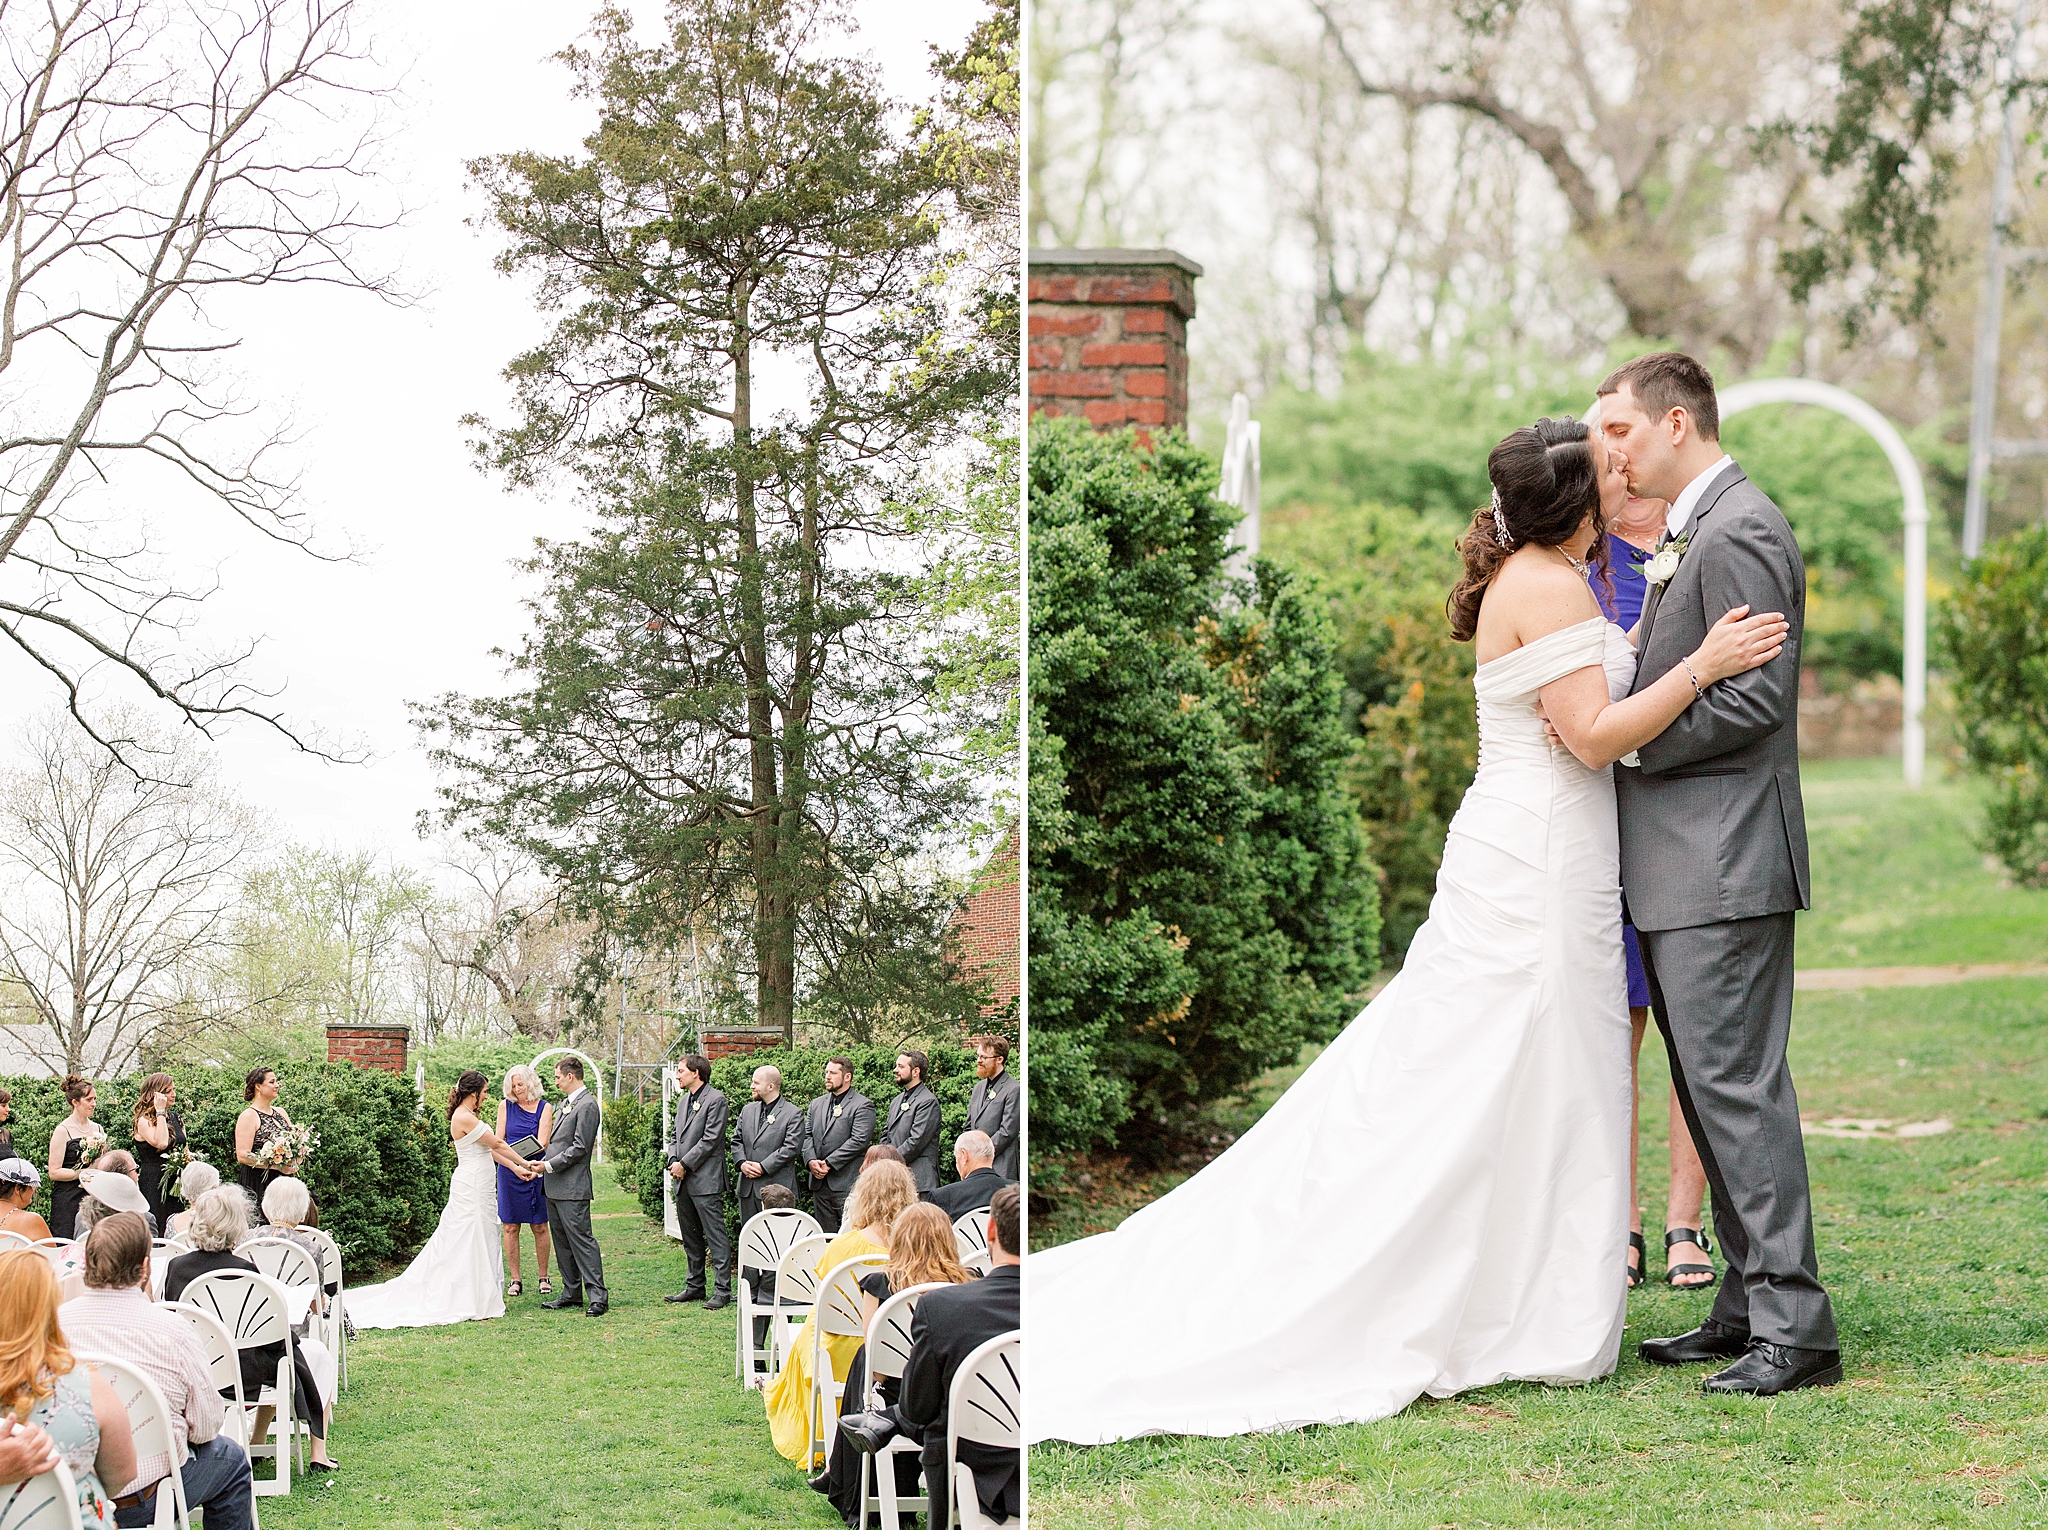 A romantic garden wedding at Hollin Hall in Alexandria, VA. 